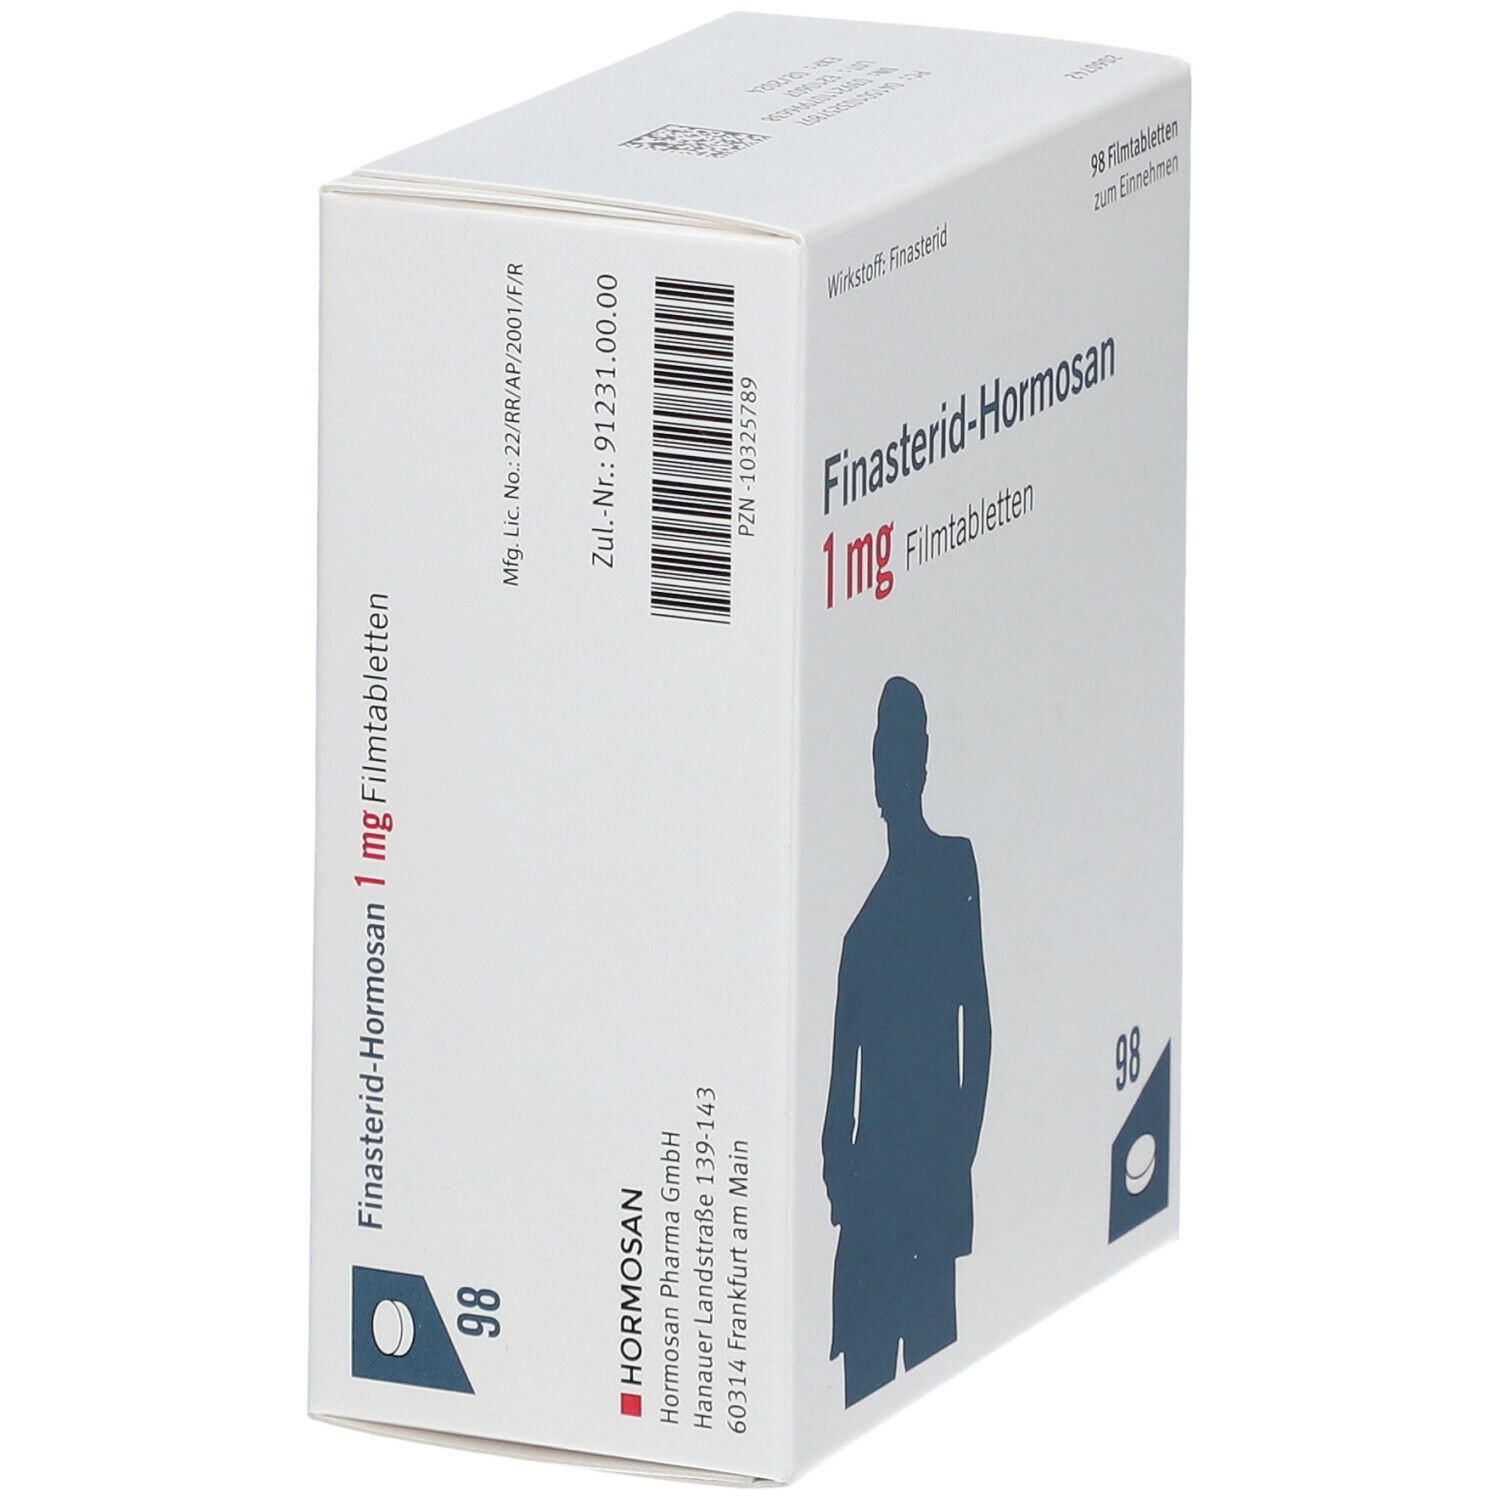 Finasterid-Hormosan 1 mg